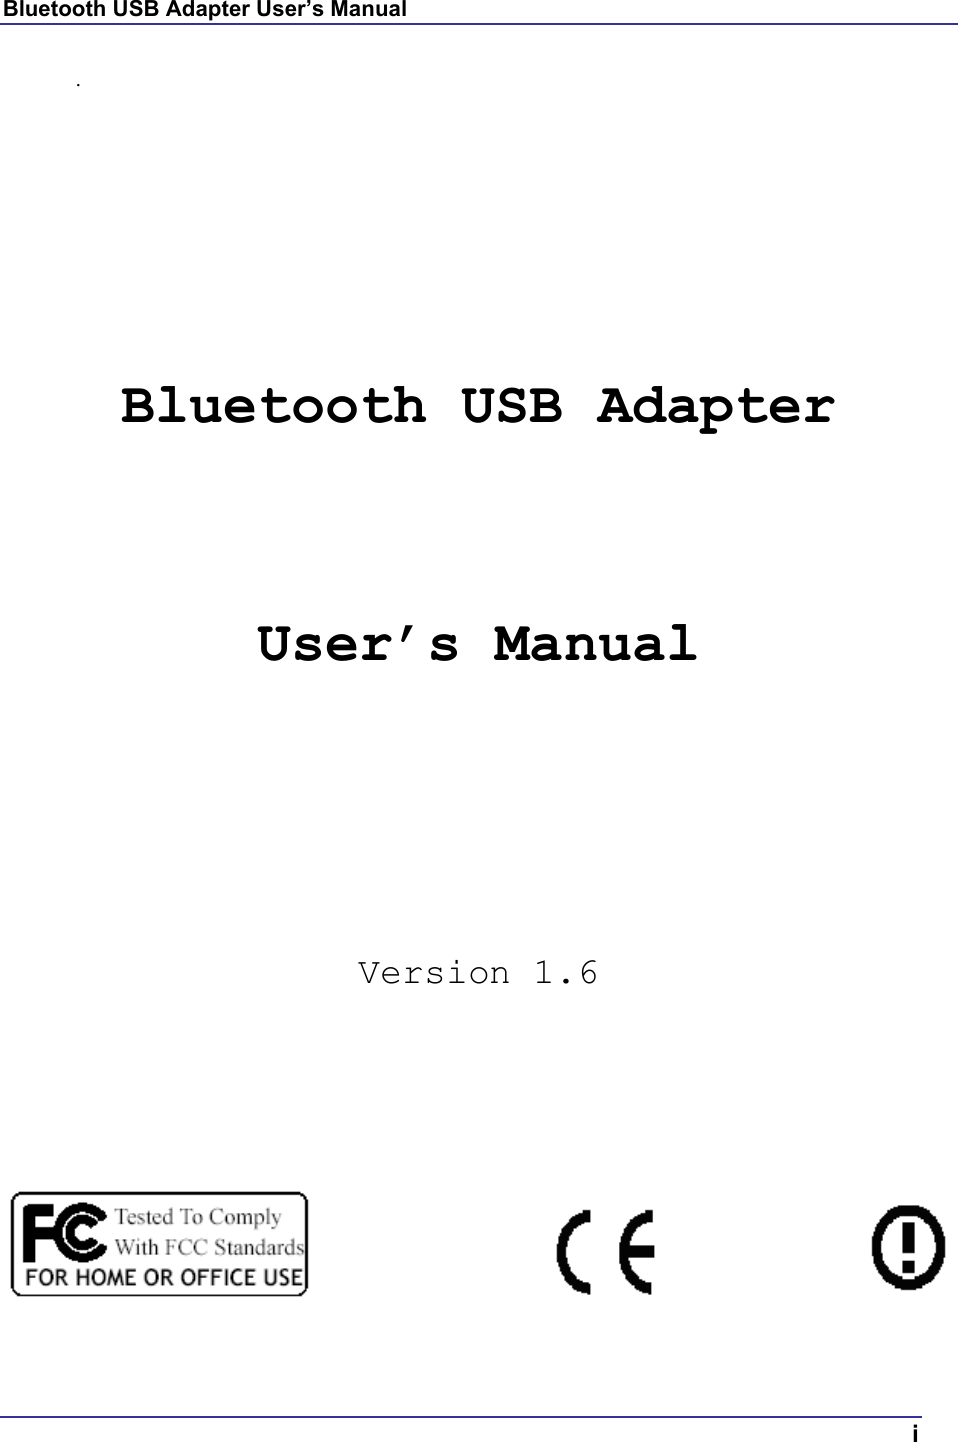 Bluetooth USB Adapter User’s Manual  i .         Bluetooth USB Adapter  User’s Manual      Version 1.6       